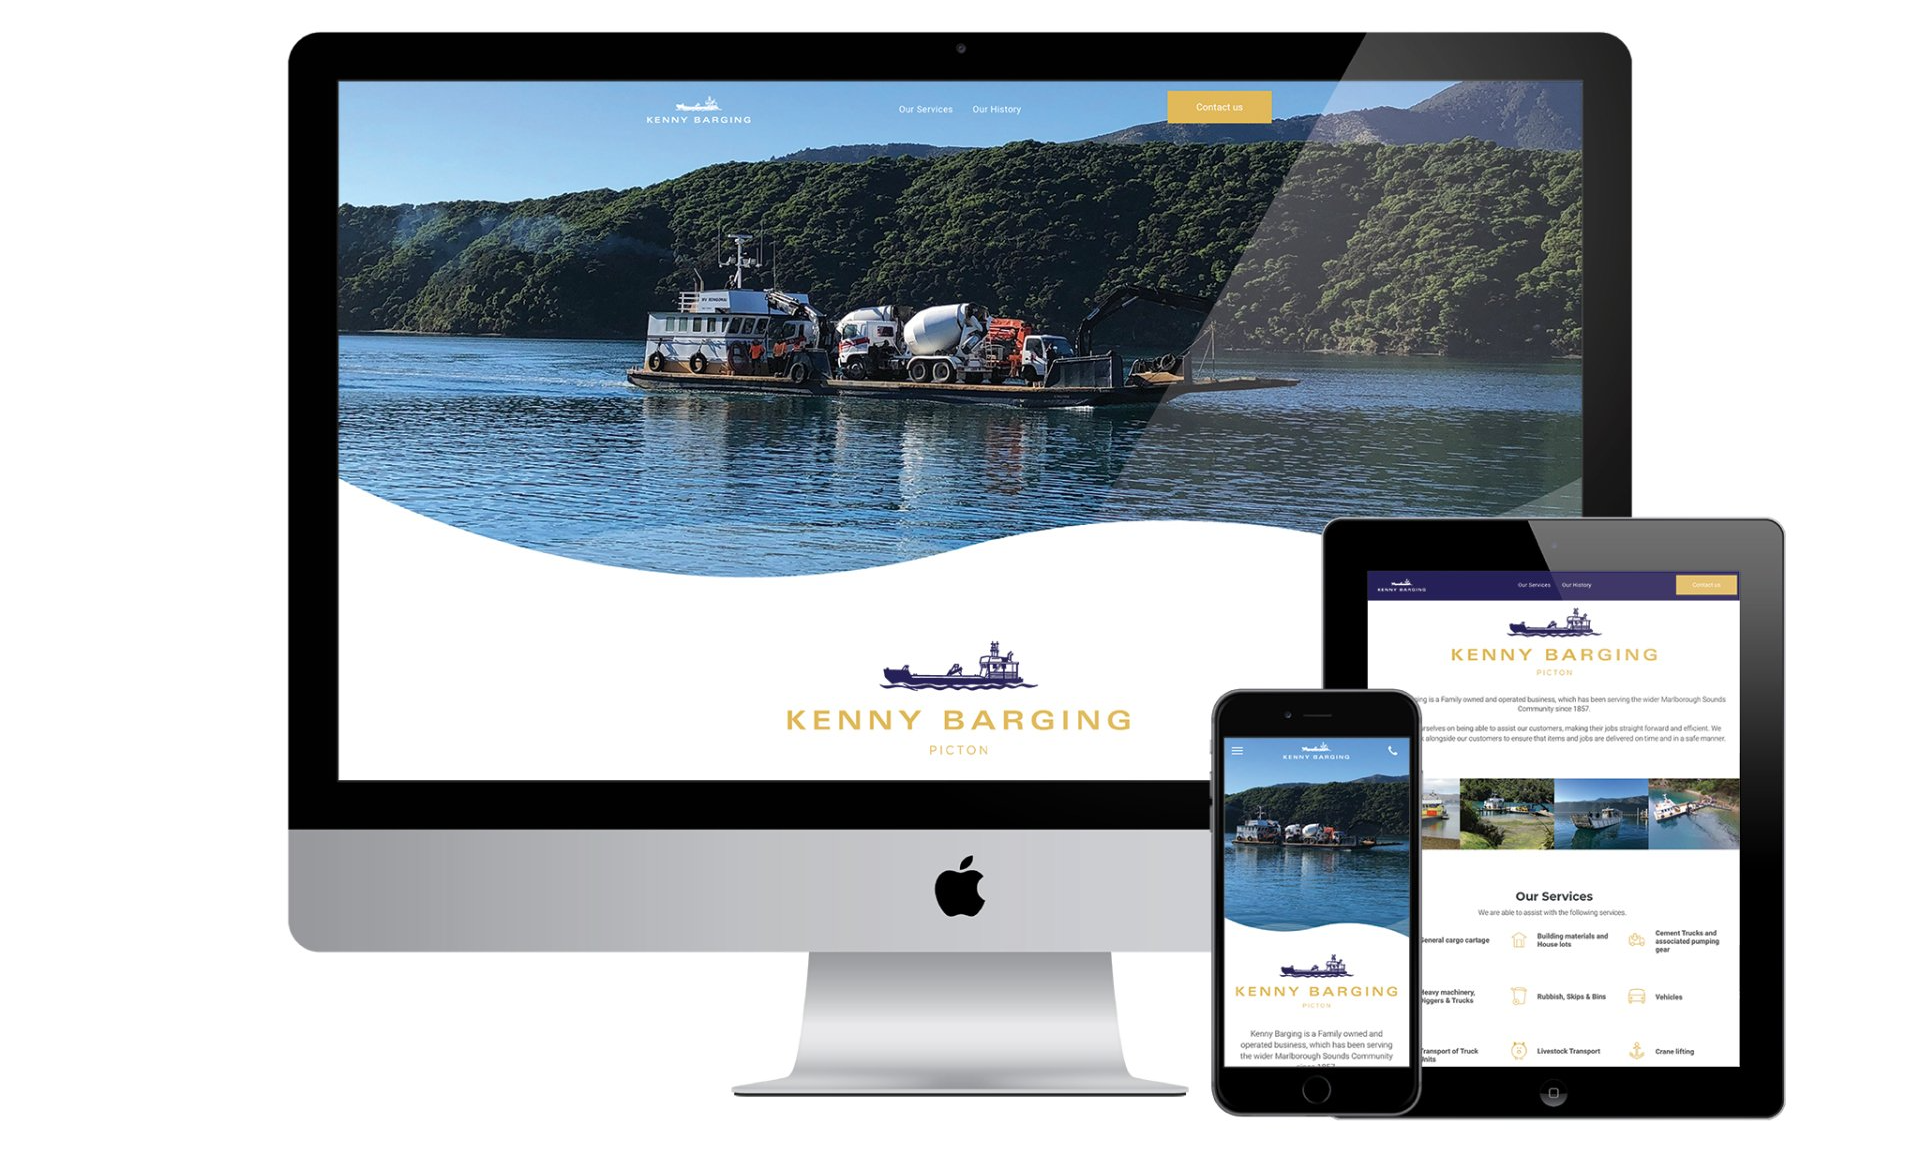 Kenny Barging website designed by Vanilla Hayes creative graphic design  studio in Blenheim, Marlborough, New Zealand